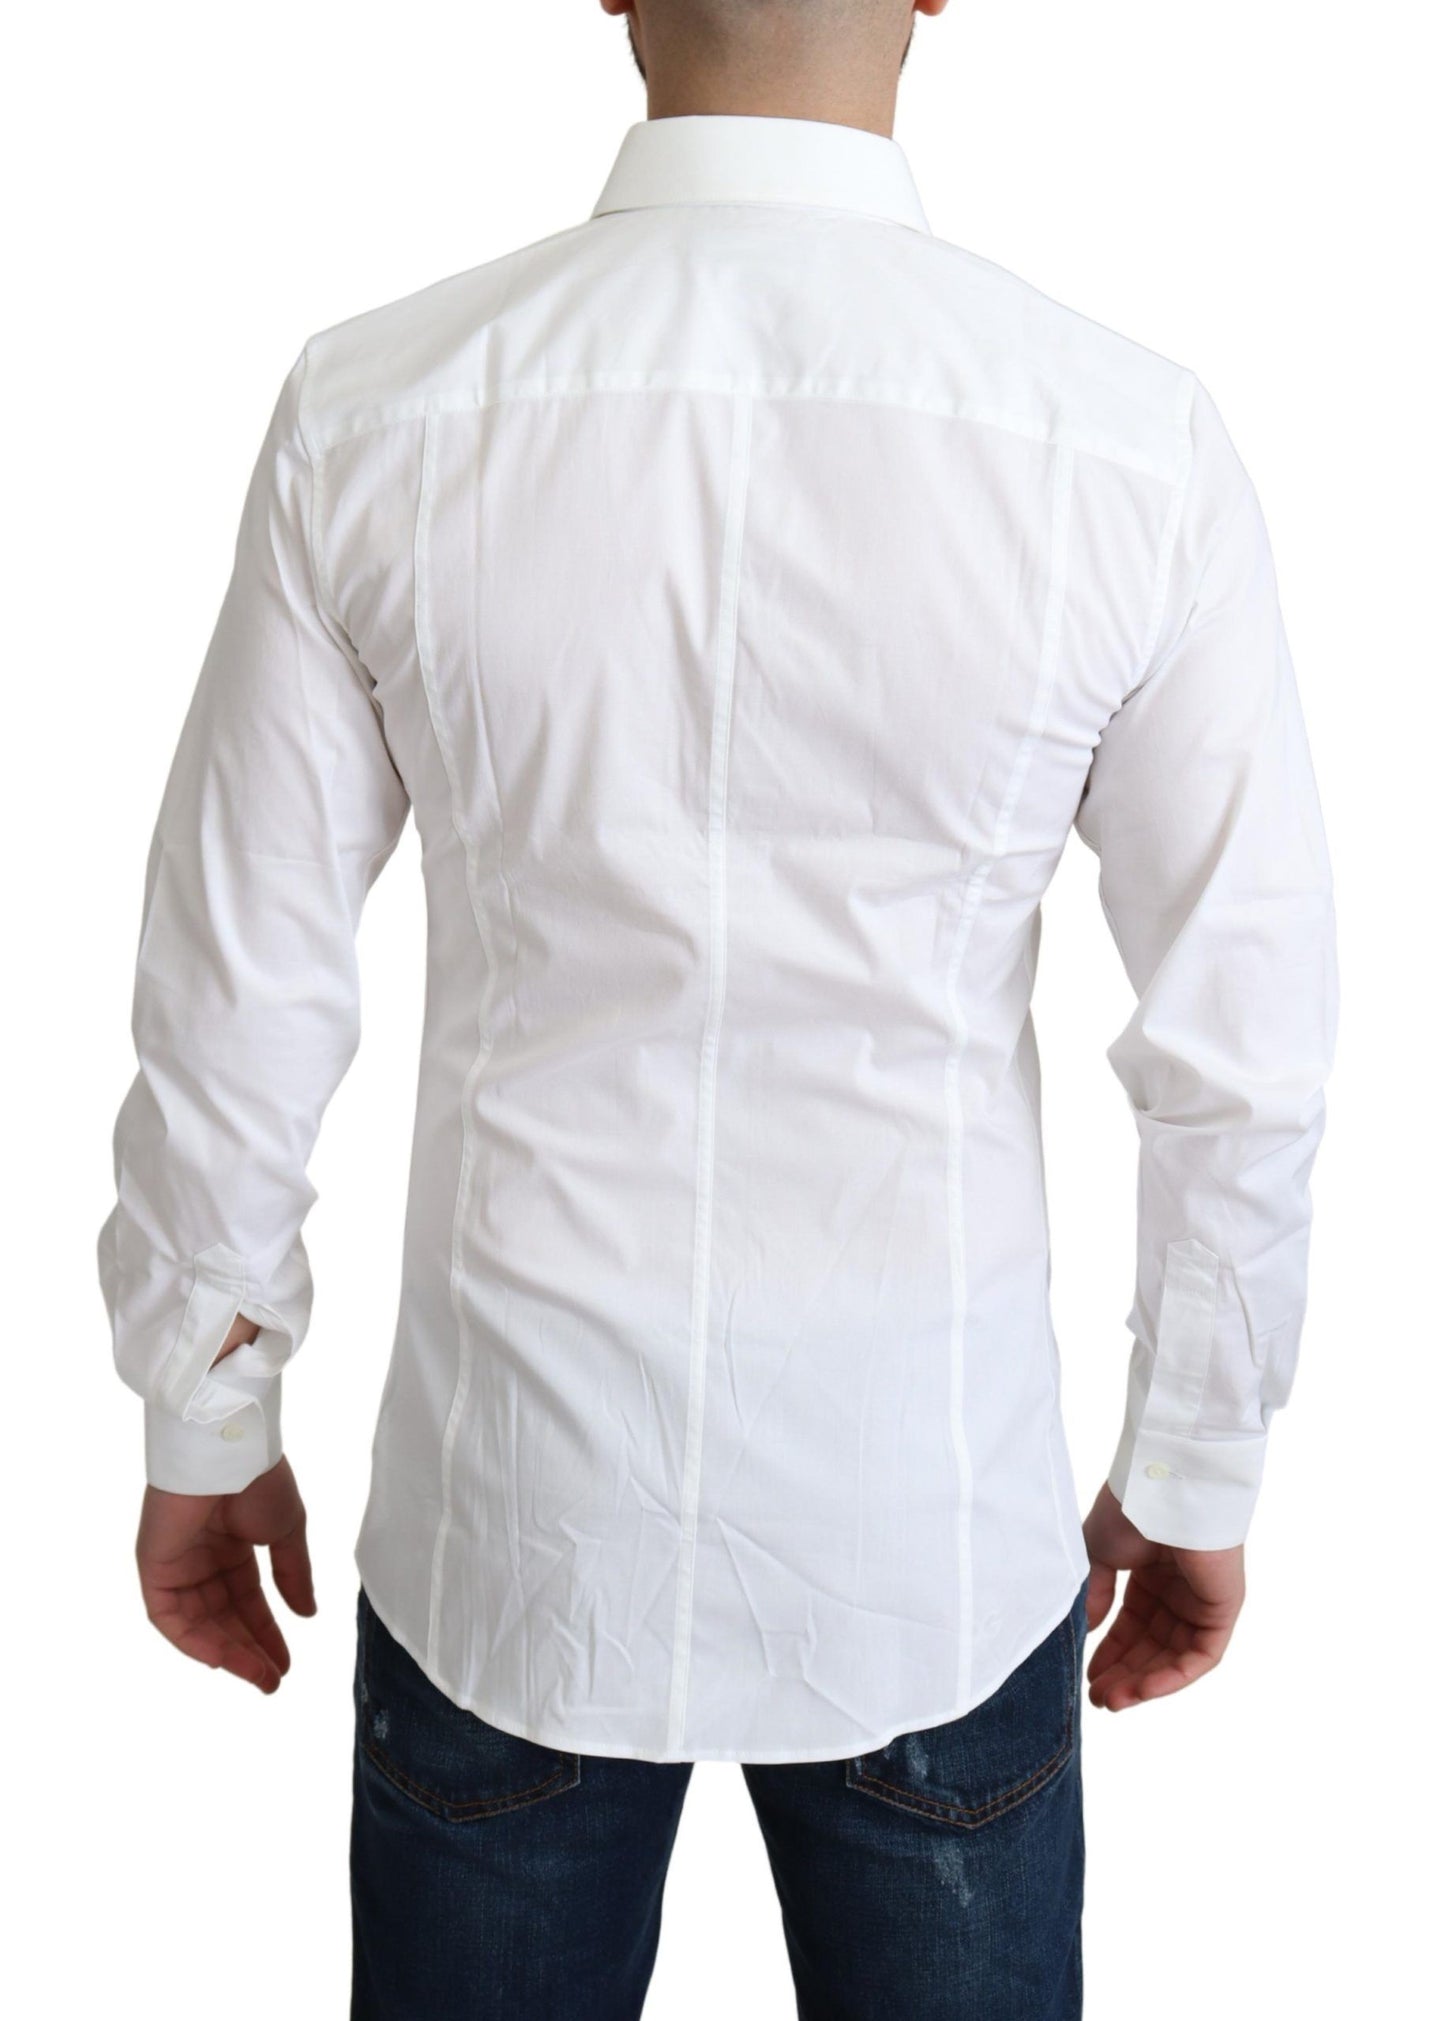 Elegant White Cotton Stretch Dress Shirt